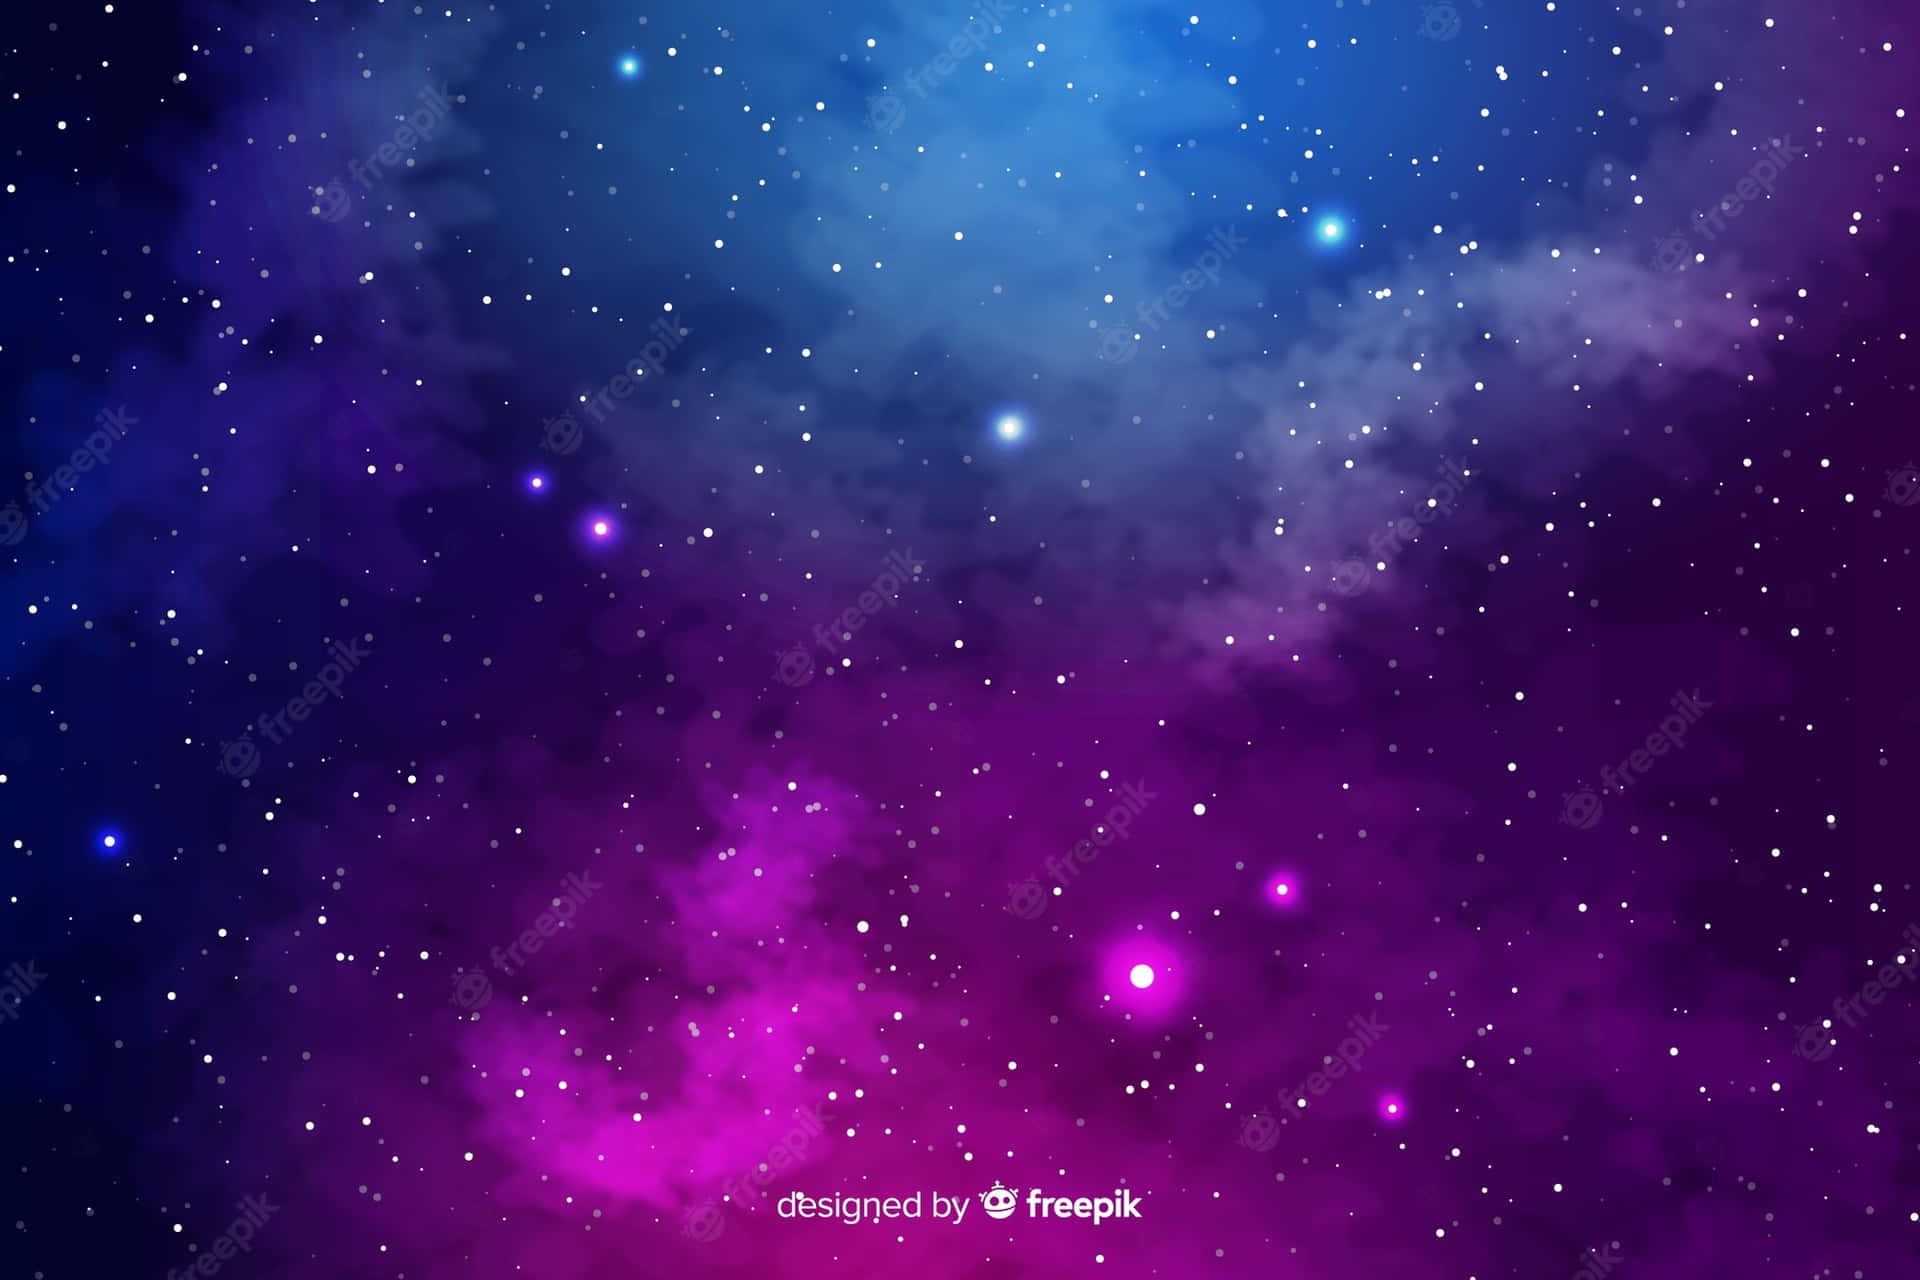 Rejsgennem Kosmos I You Are Here Galaxy. Wallpaper